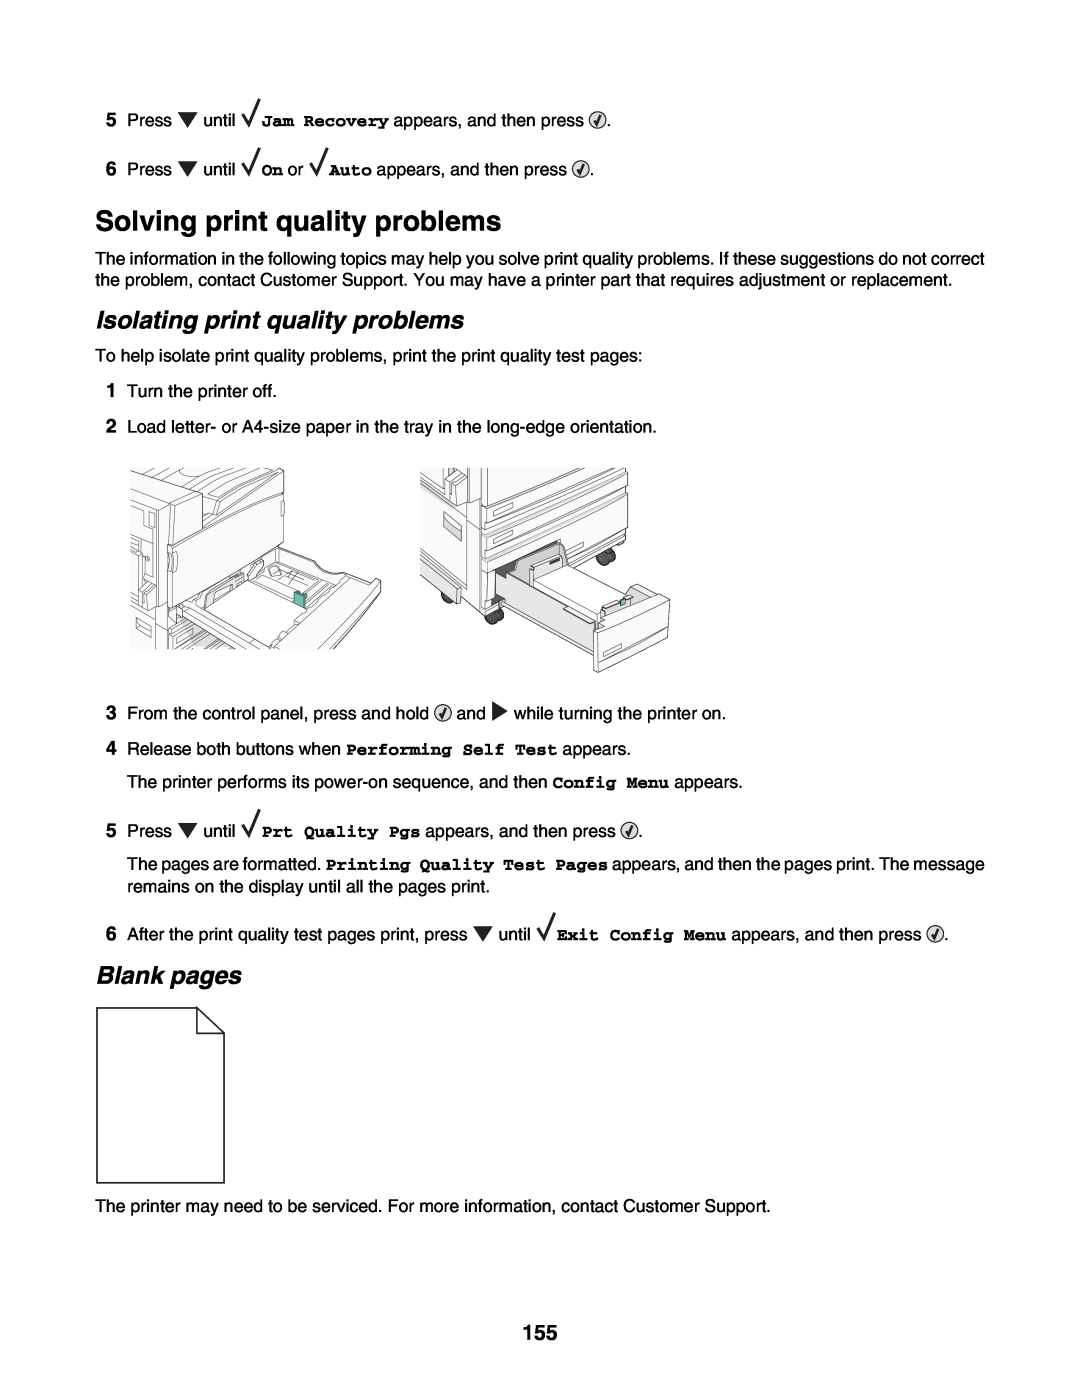 Lexmark C935 manual Solving print quality problems, Isolating print quality problems, Blank pages 